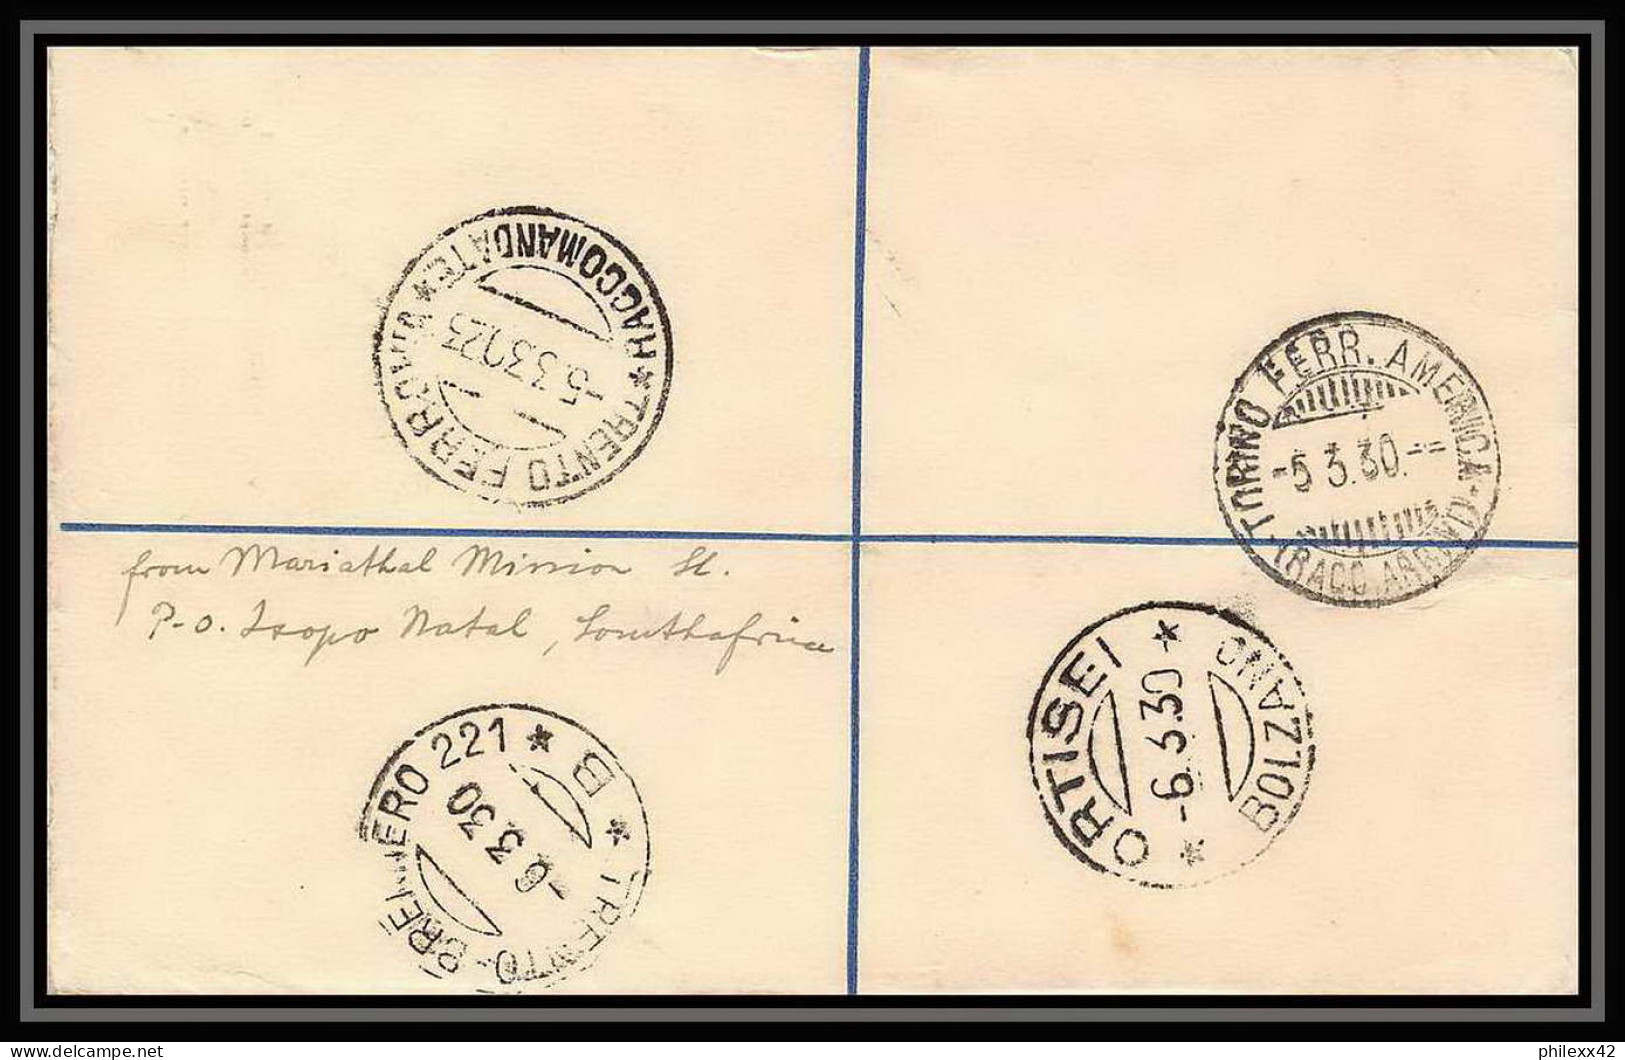 1718/ Afrique Du Sud (RSA) N°2 Complément Entier Stationery Enveloppe Cover Registered Pour Italie (italy) 1930 - Covers & Documents